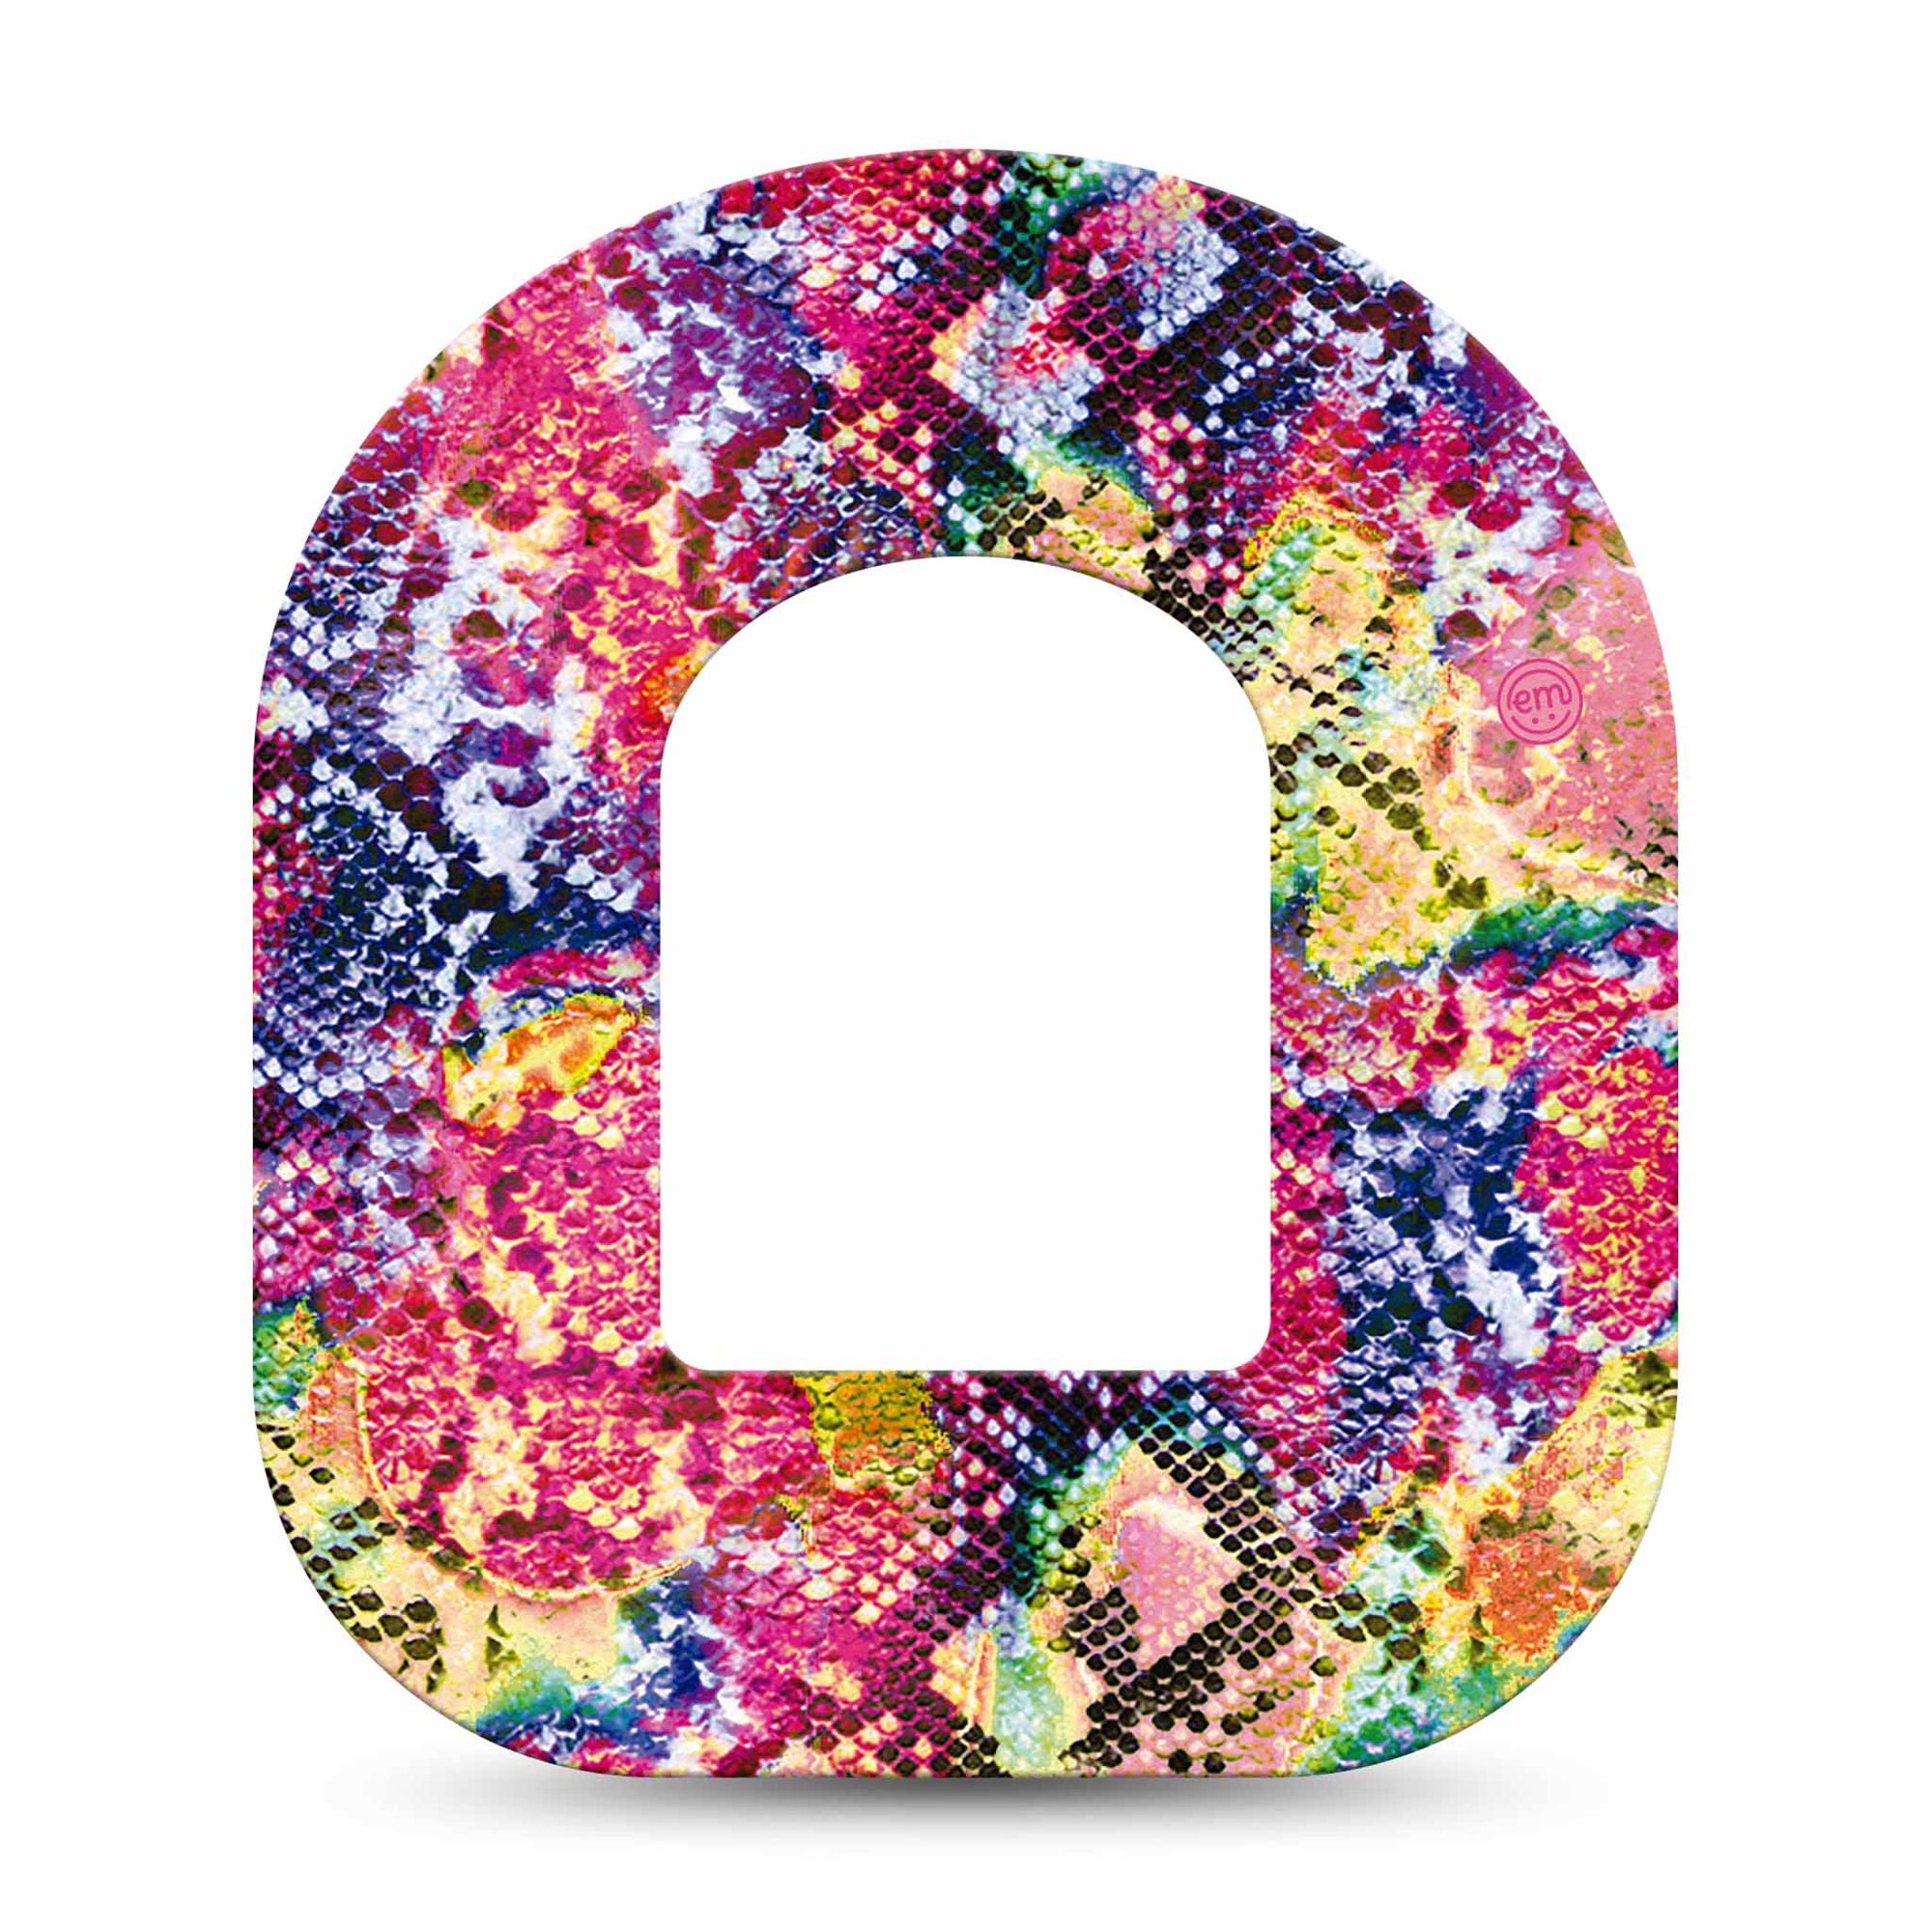 ExpressionMed Rainbow Snakeskin omnipod Tape, Single, Fun Snake CGM Adhesive Design